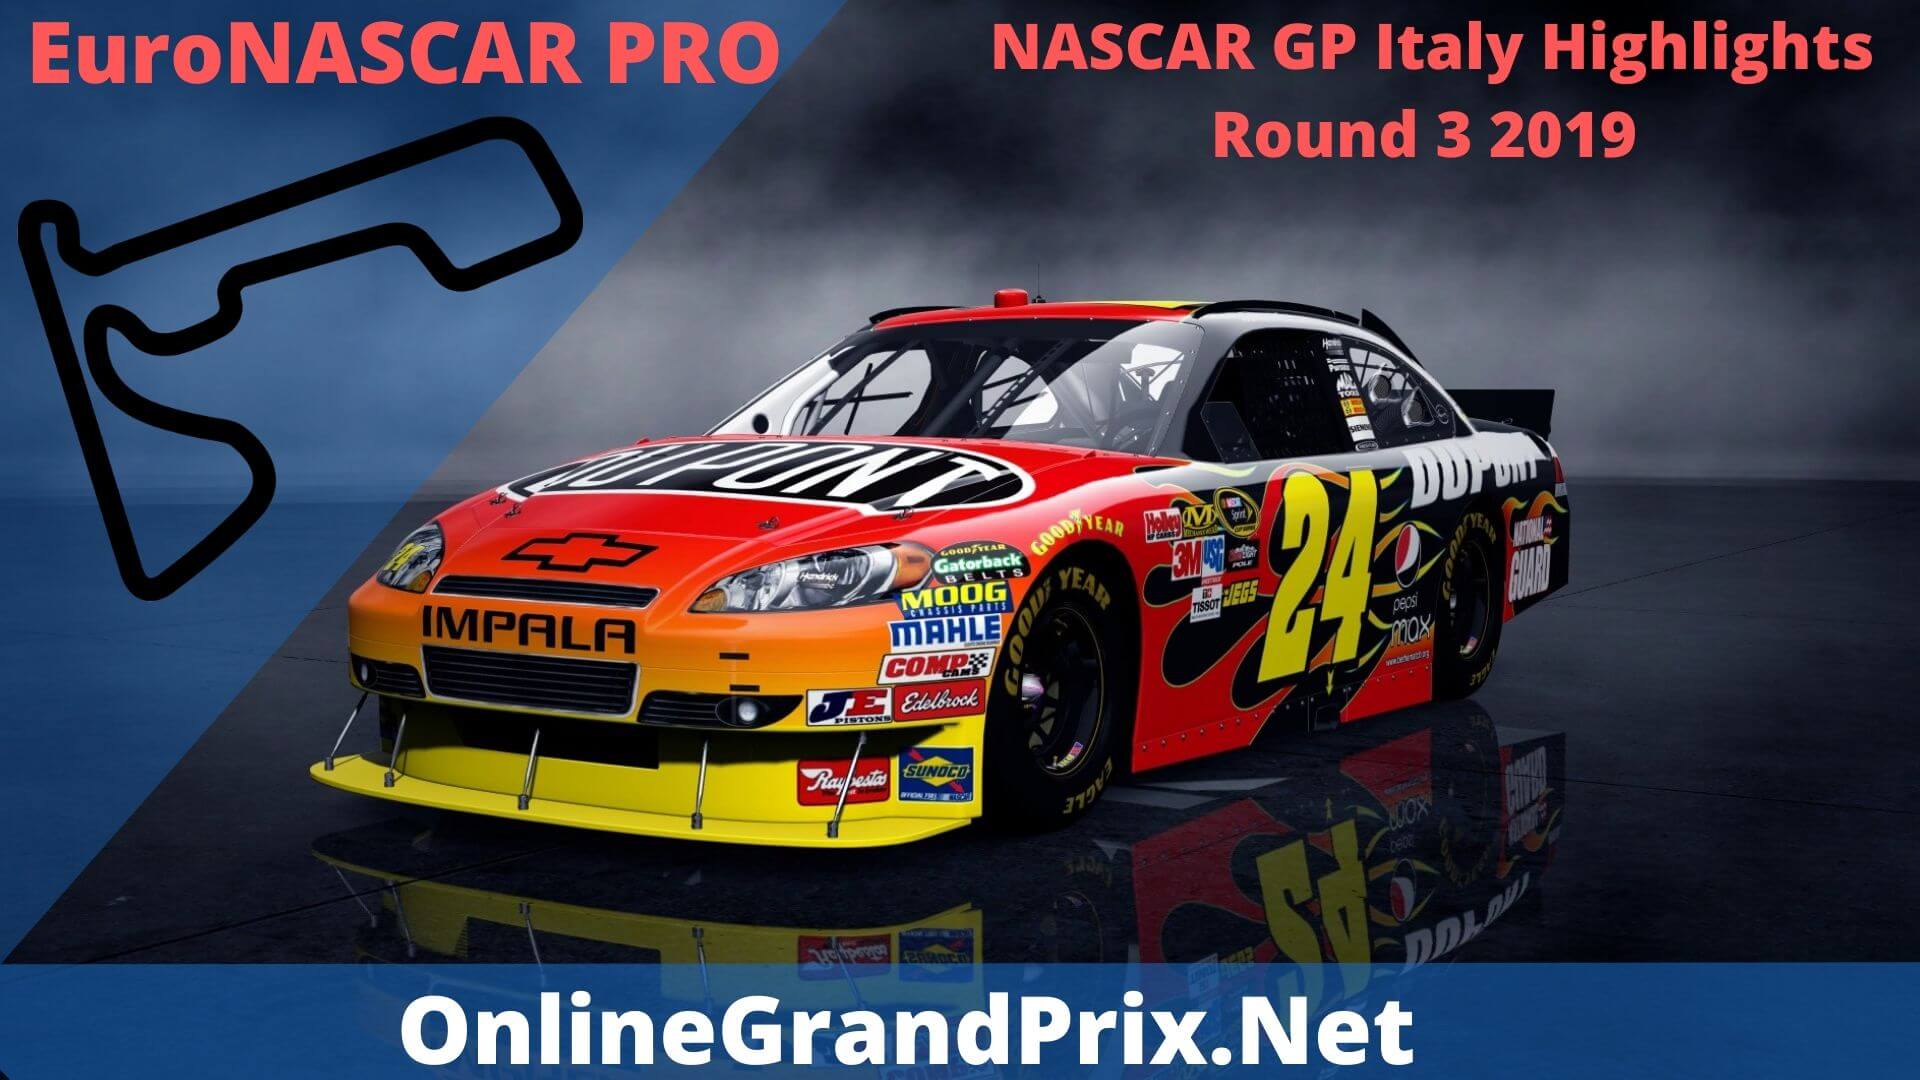 NASCAR GP Italy Round 3 Highlights 2019